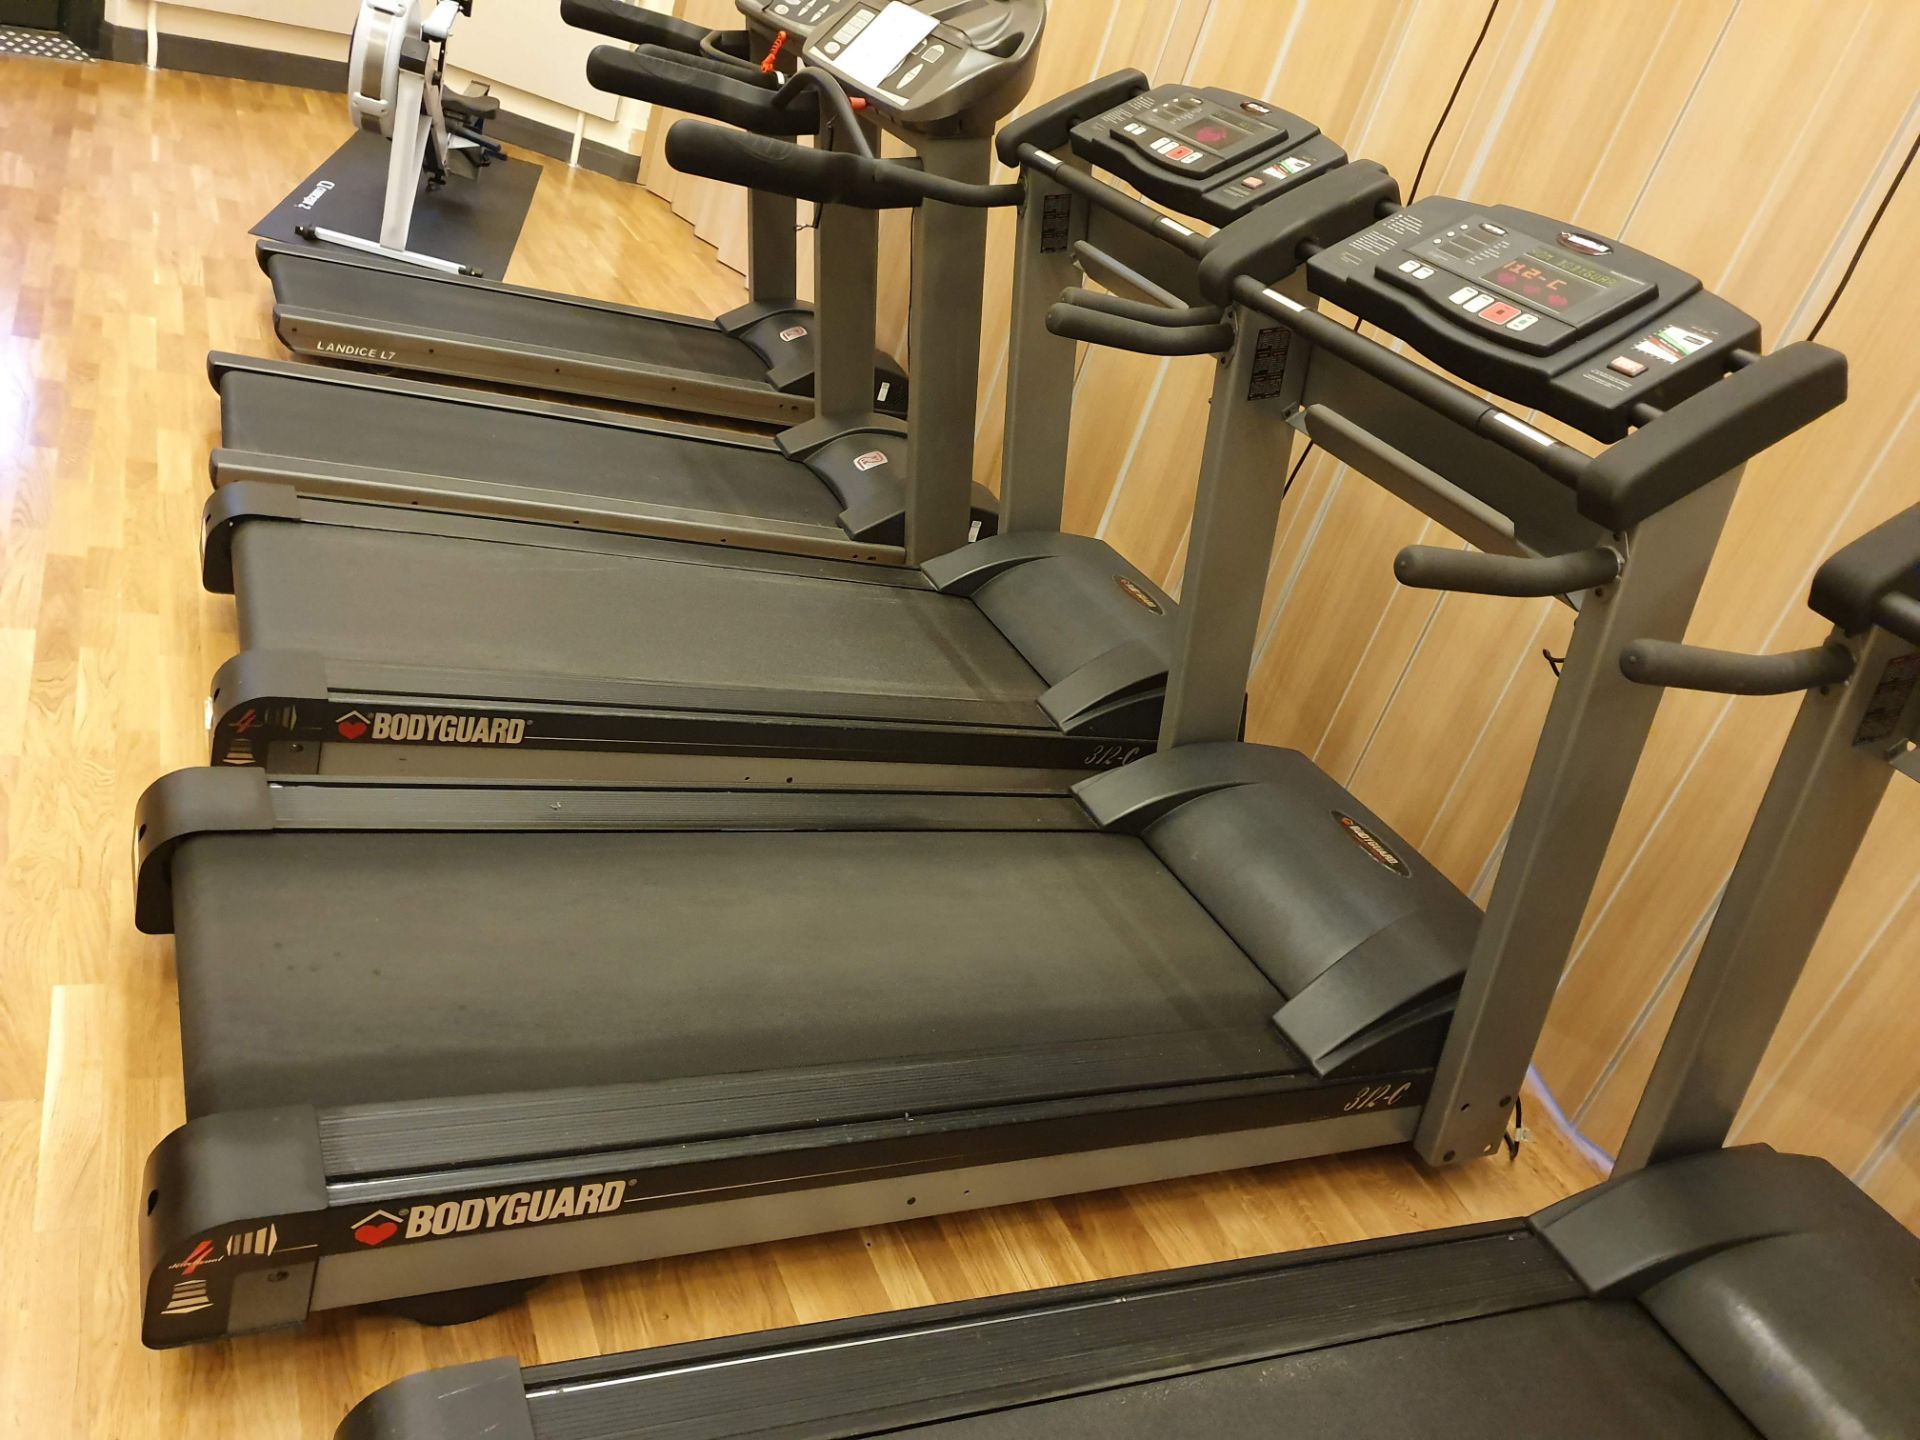 1 x Bodyguard 312C Treadmill Running Machine - CL552 - Location: West YorkshireFeatures: (